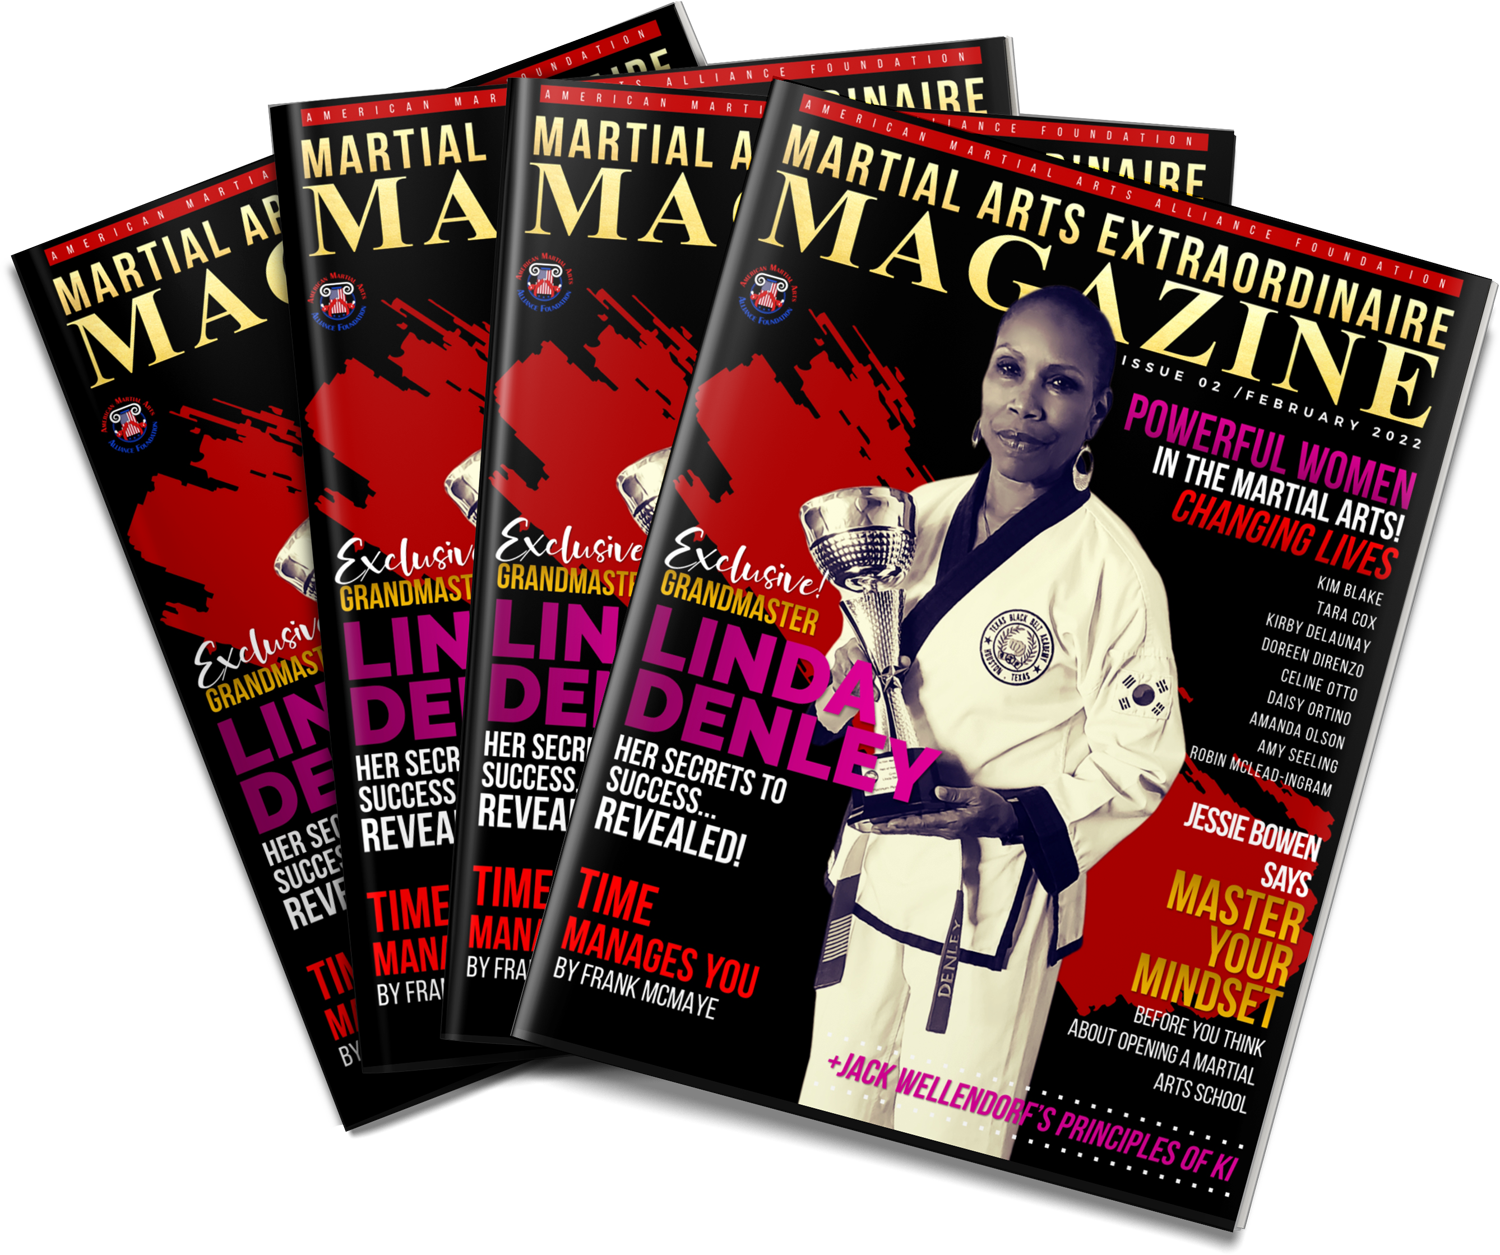 The Martial Arts Extraordinaire Magazine Linda Denley Edition, Printed Copy